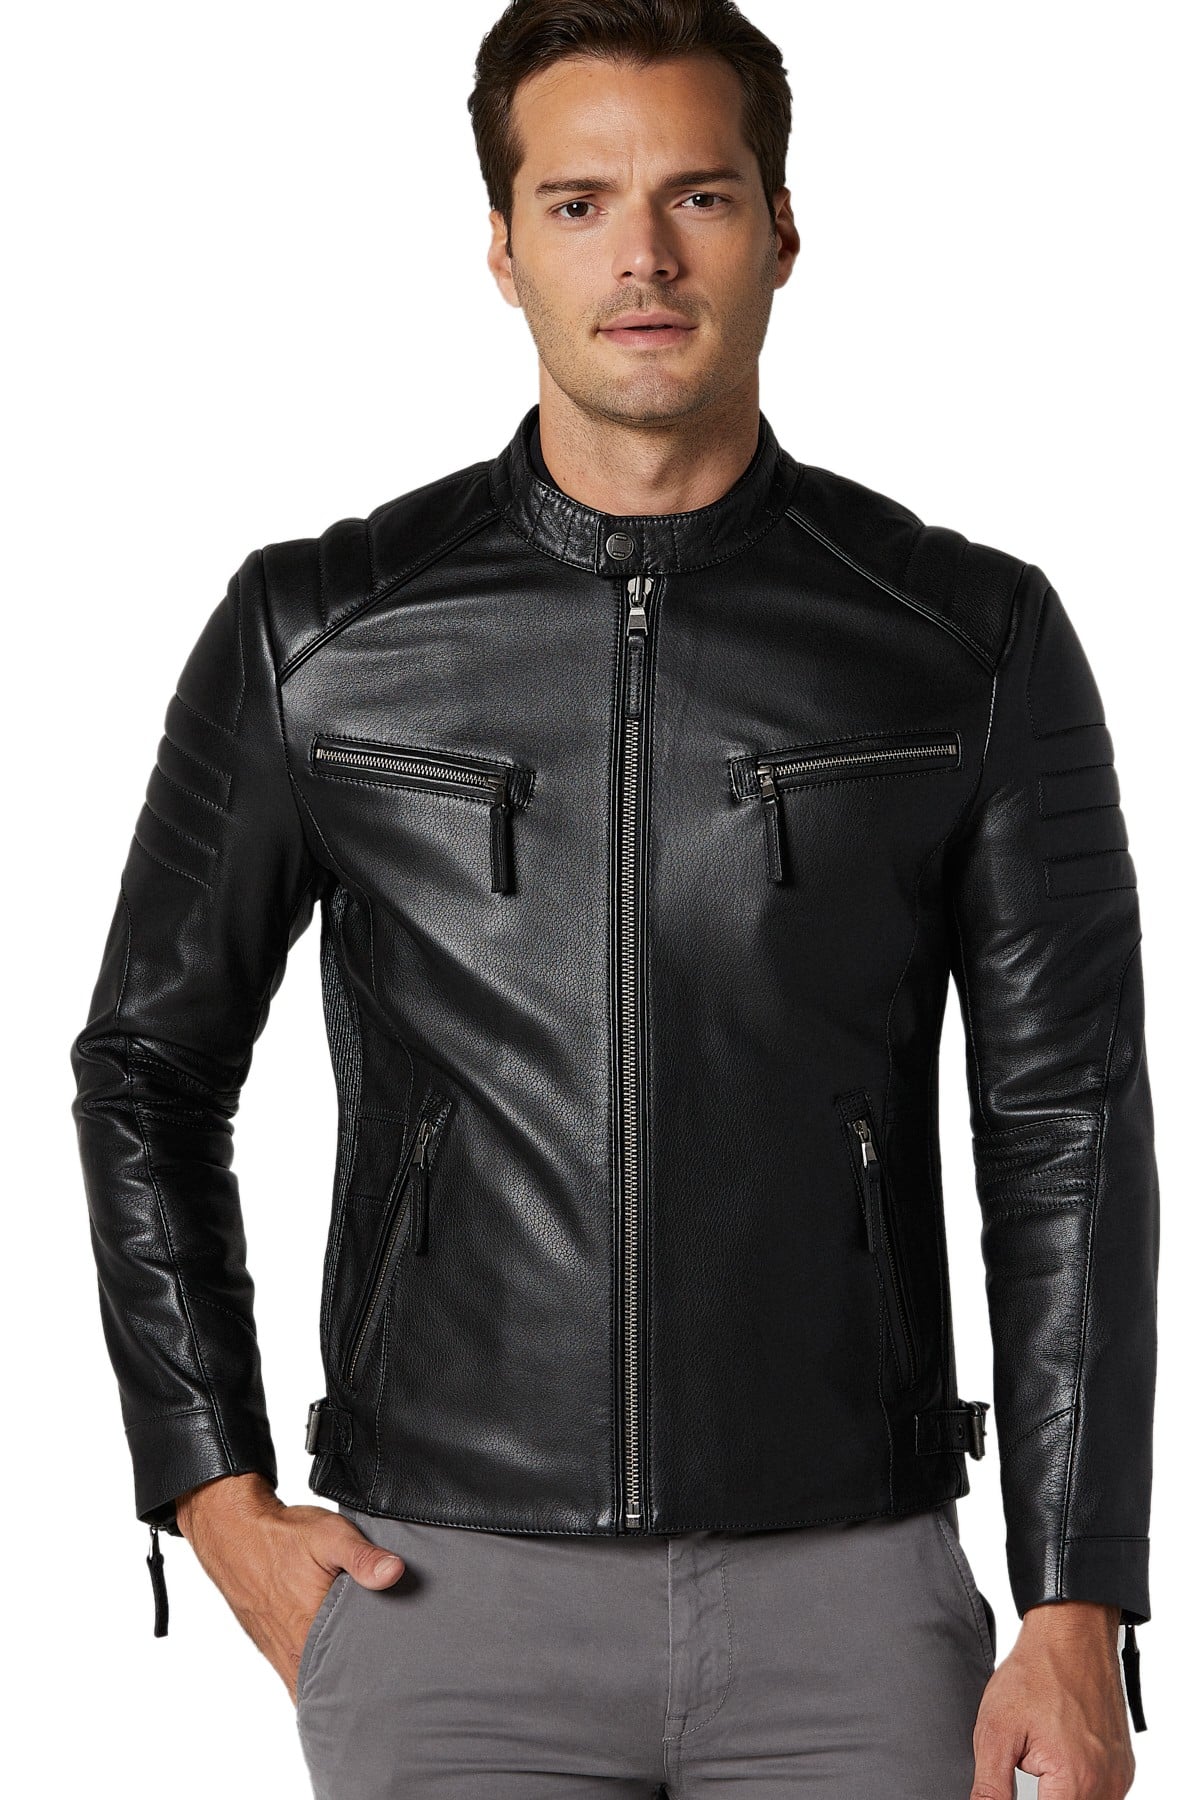 Marlon Teixeira Men's 100 % Real Black Leather Biker Style Classic Jacket